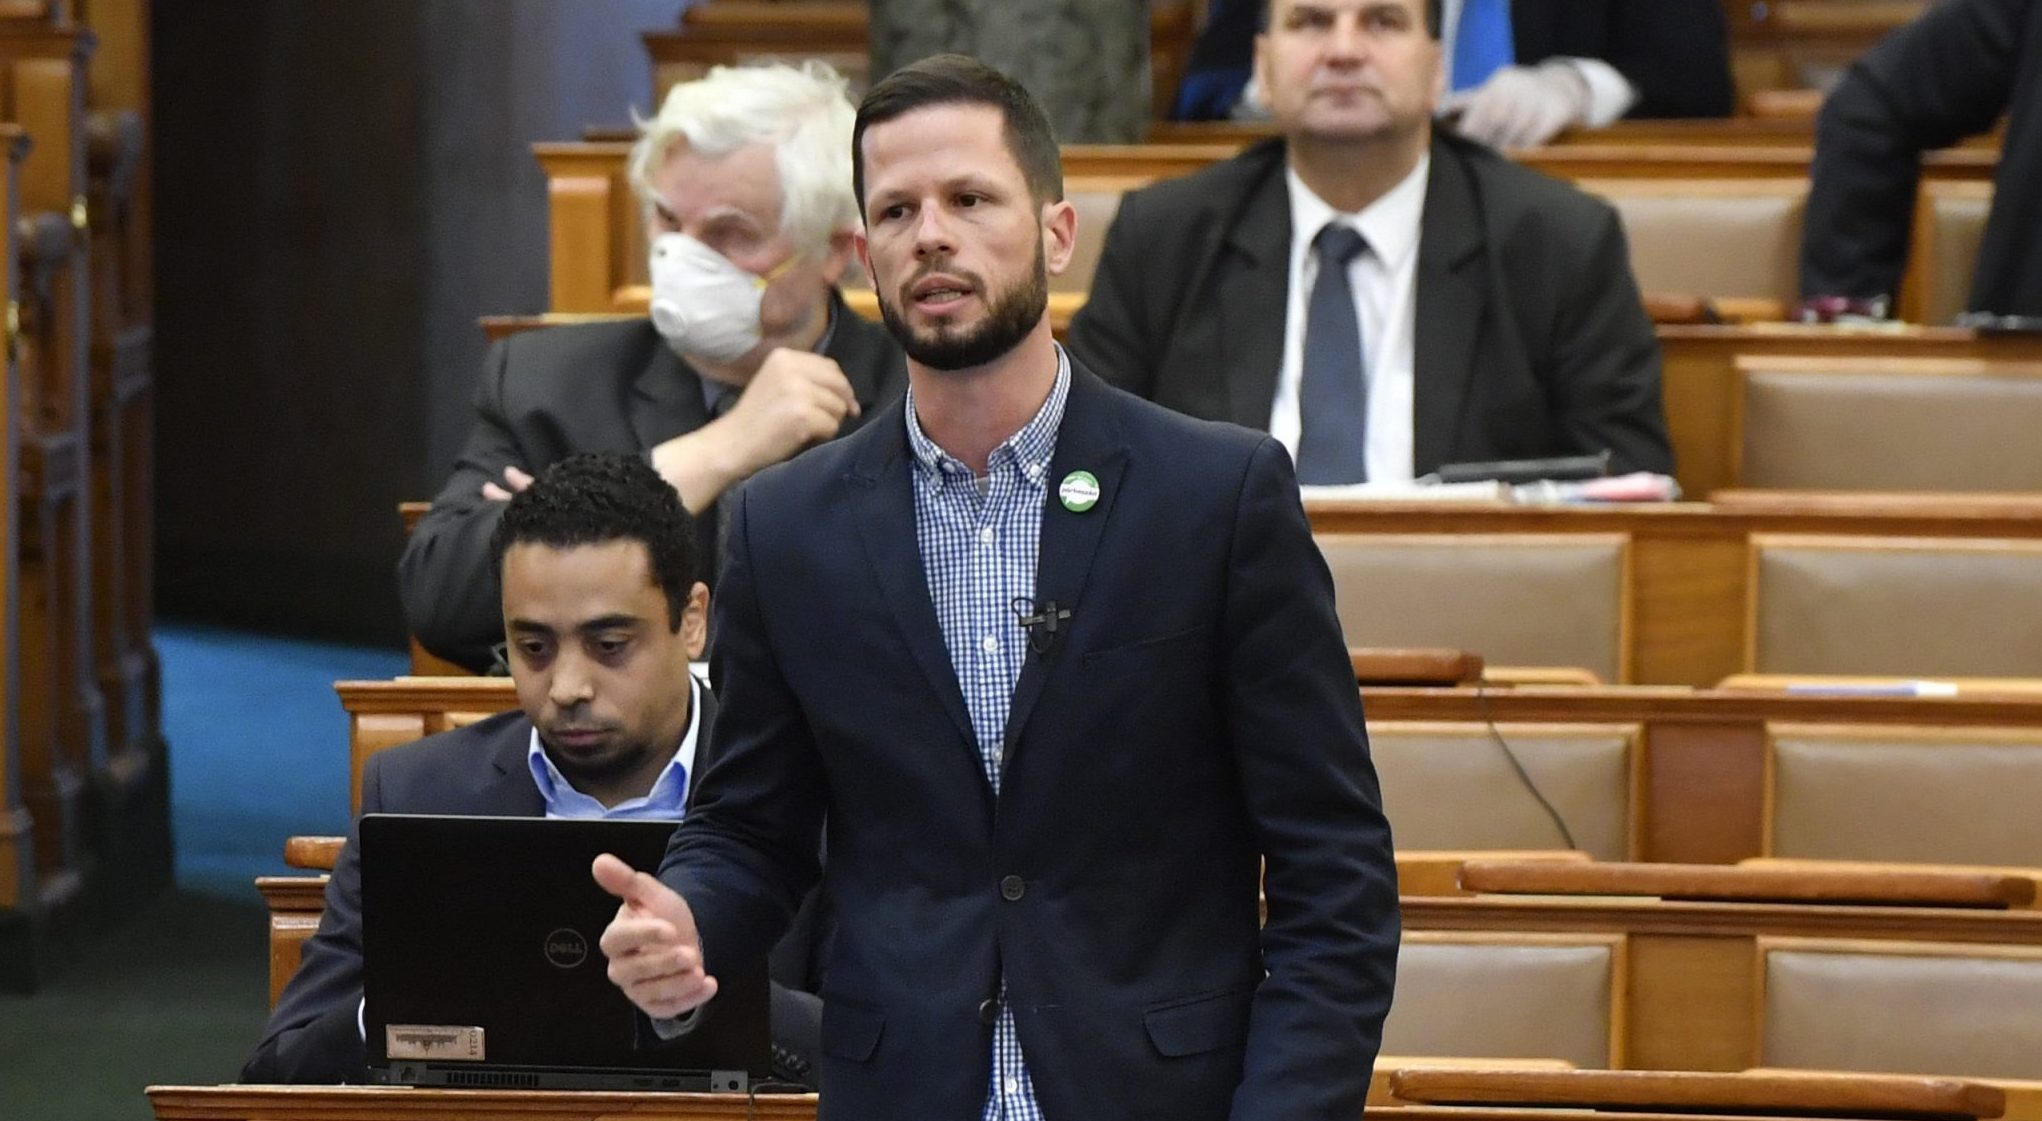 House Speaker Fines Opposition MP Tordai over 8 Million Forints